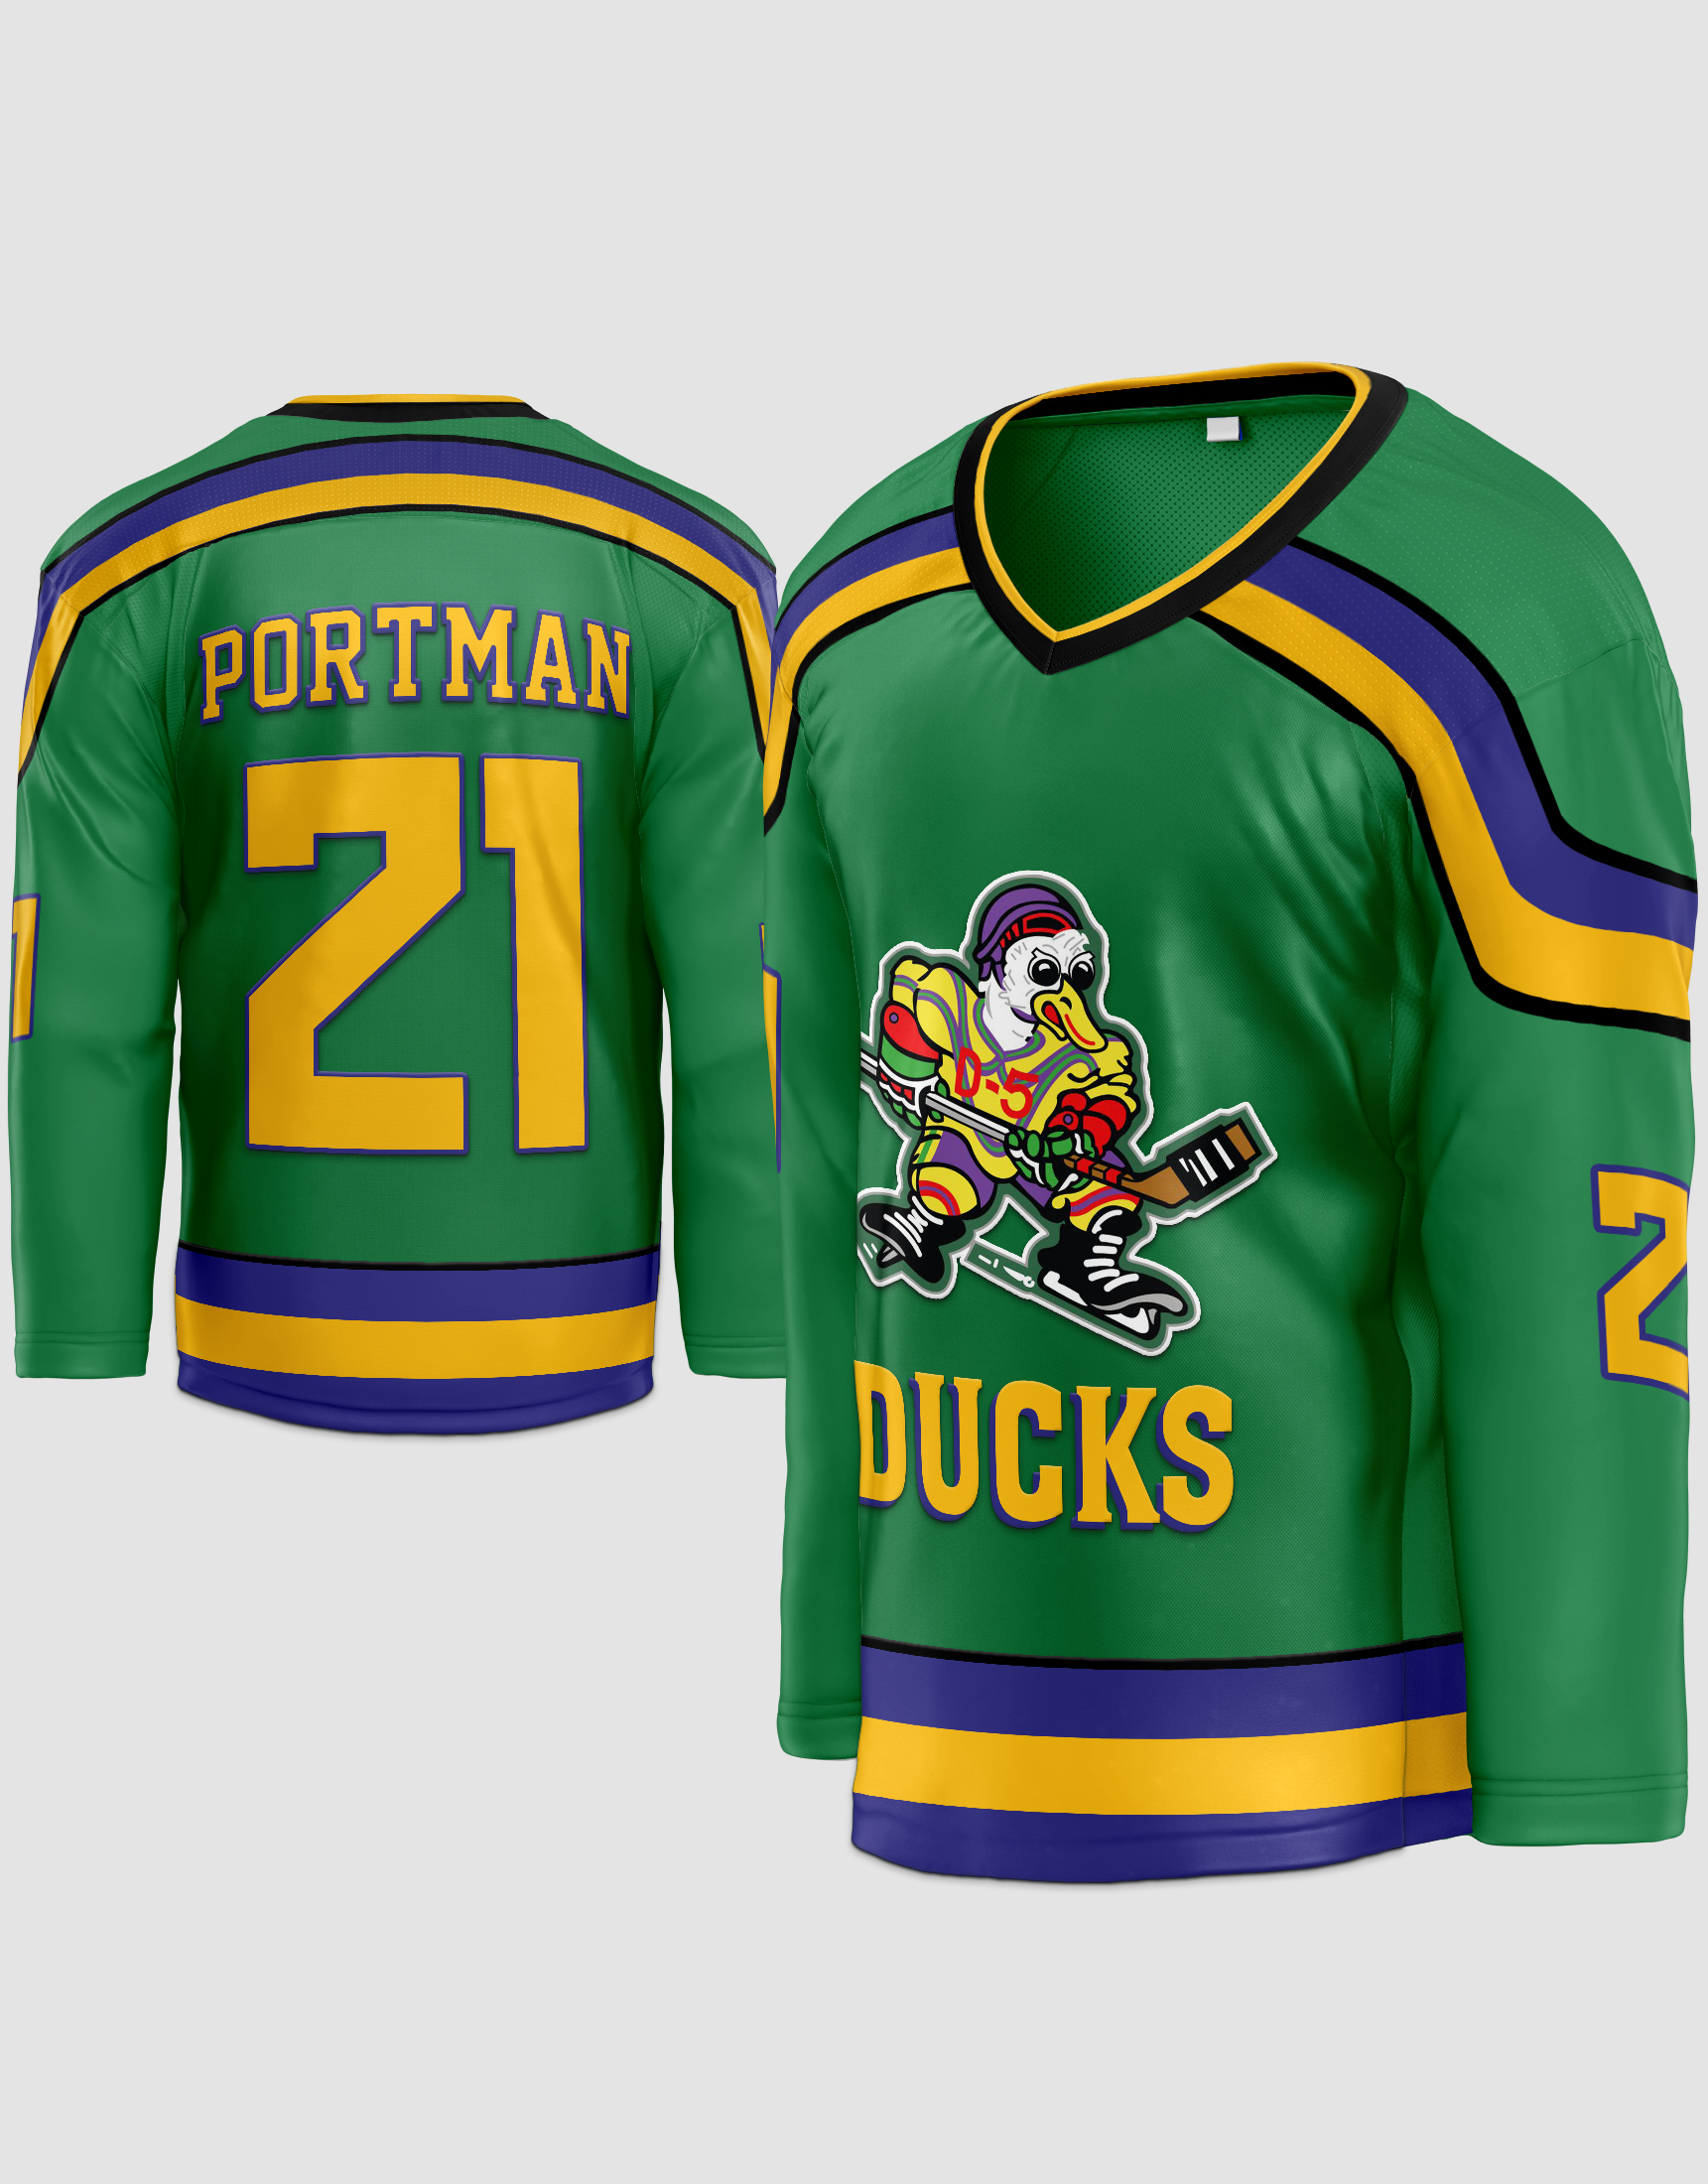 Dean Portman #21 Mighty Ducks Movie Jersey T-Shirt Bash Brothers Costume  Uniform